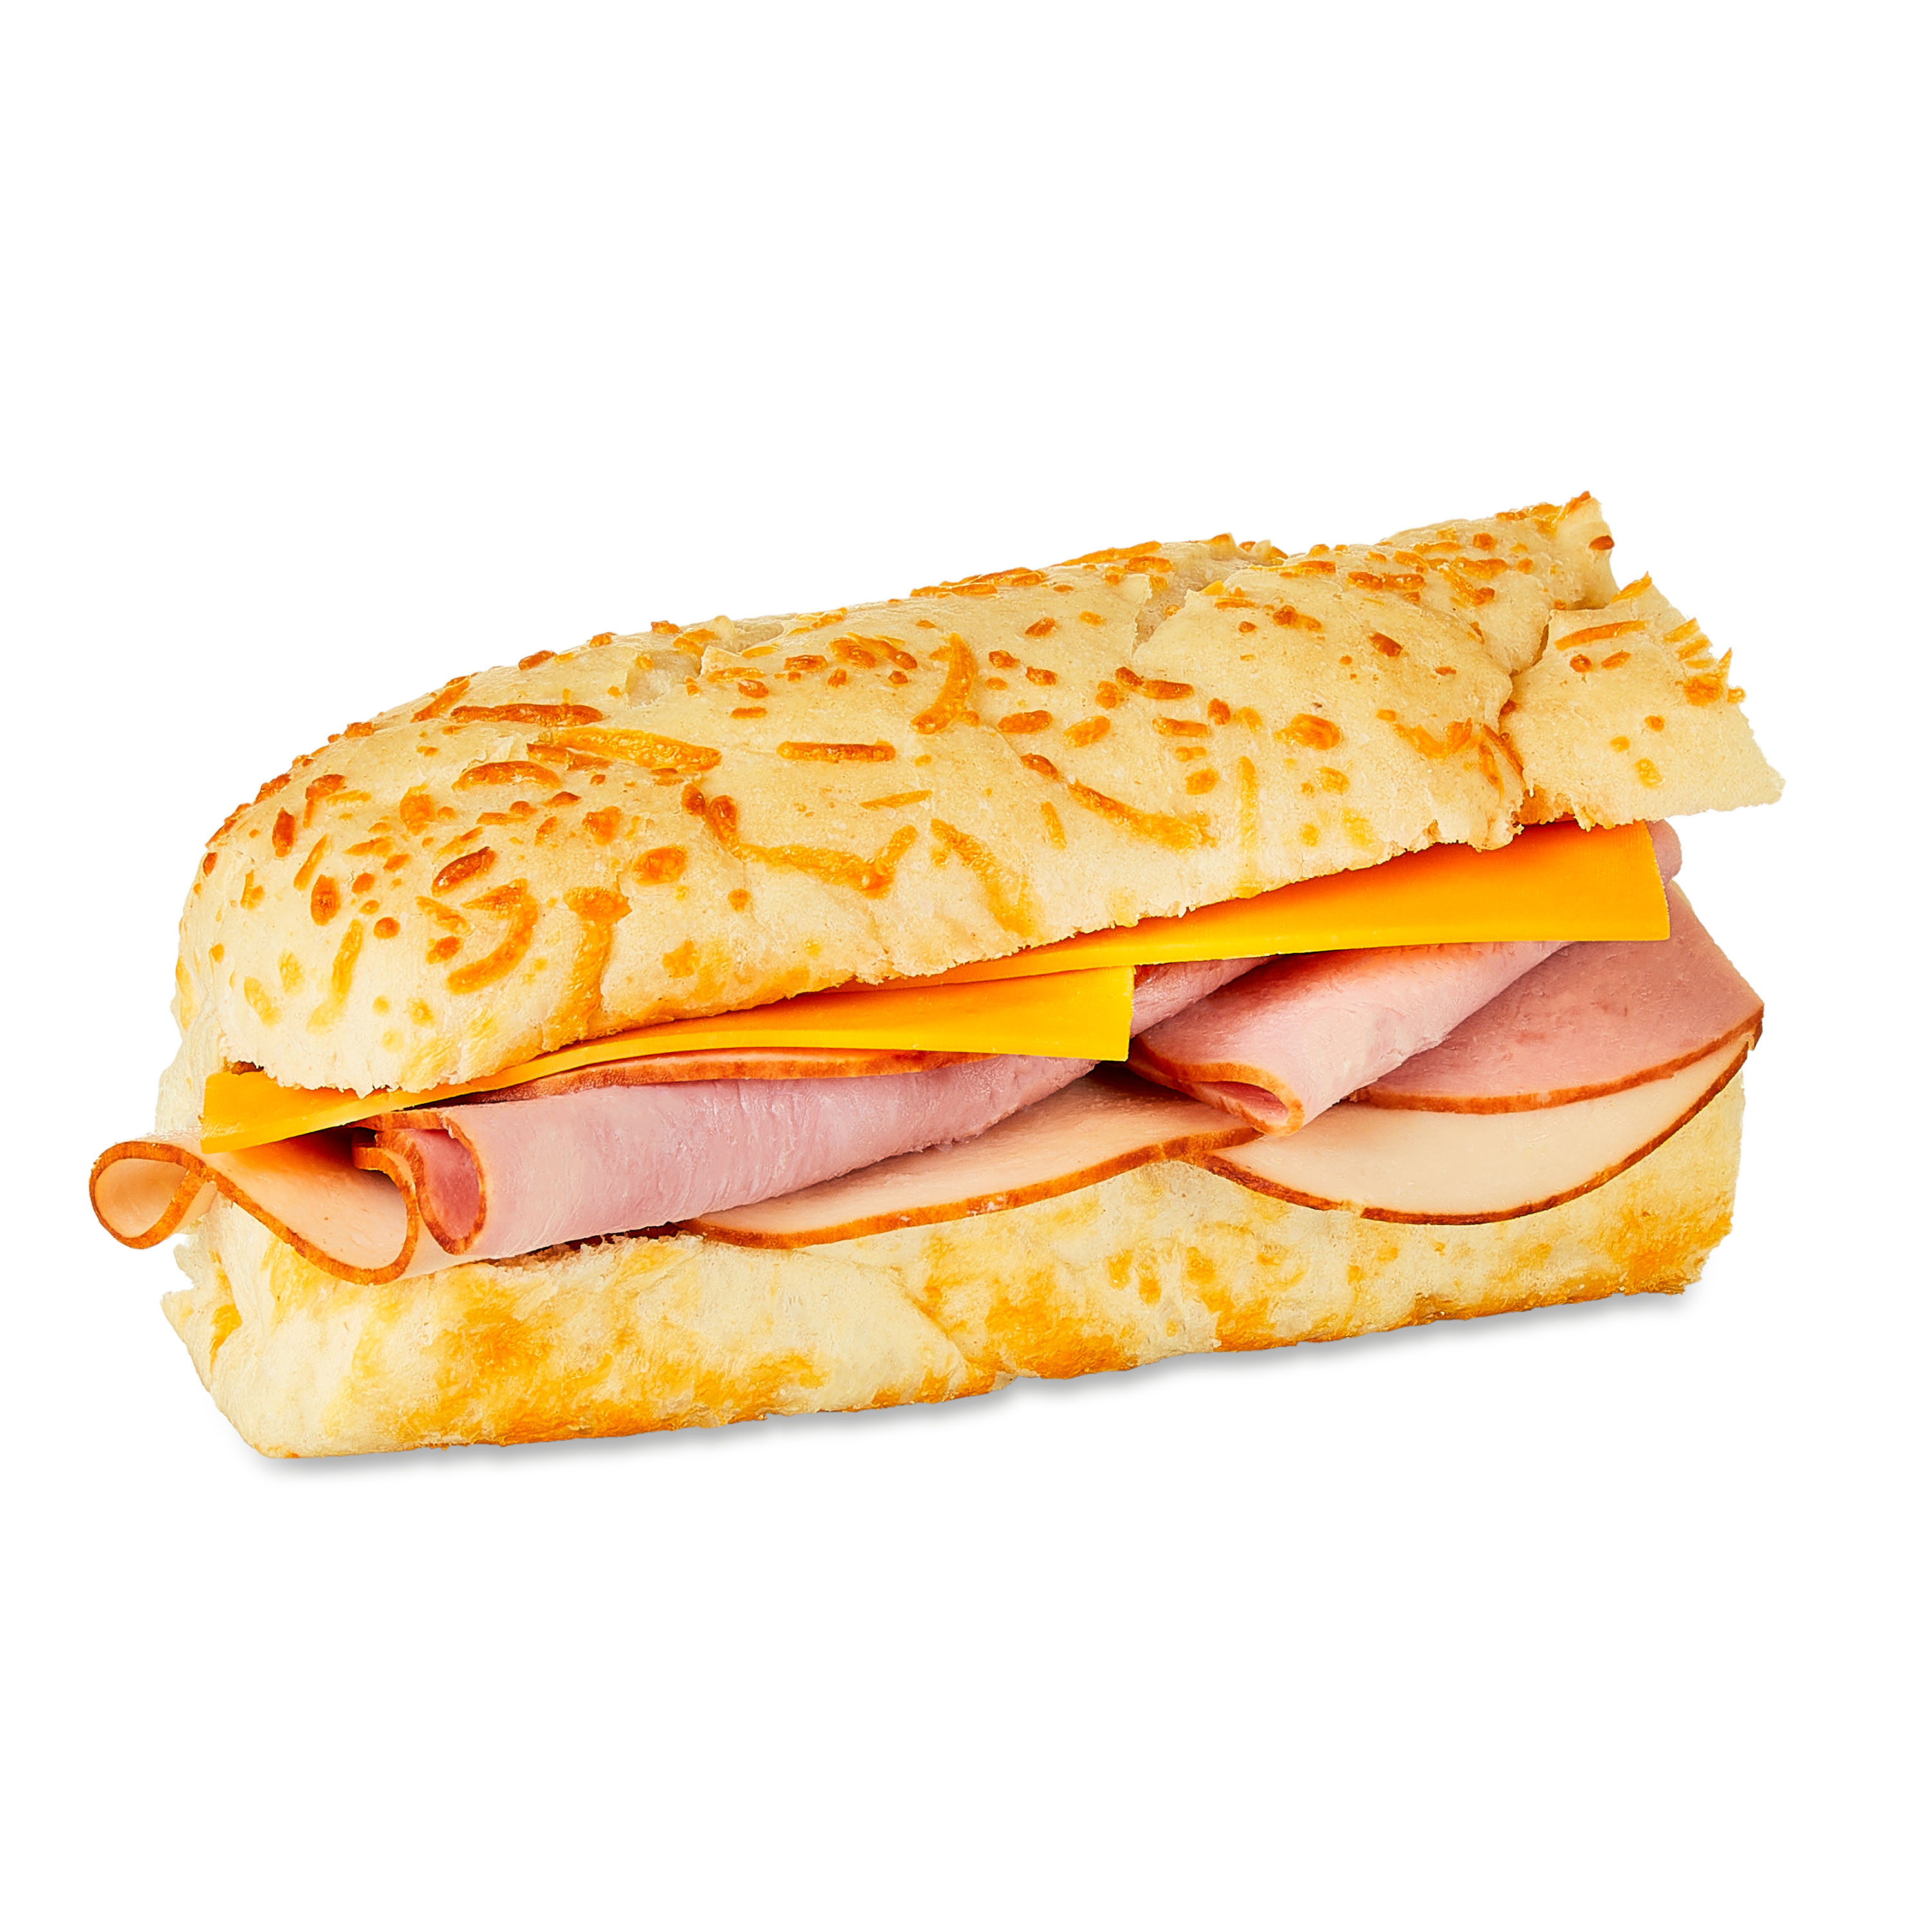 Marketside All American Sub Sandwich, Half, 6.5 oz, 1 Count (Fresh) - image 1 of 7